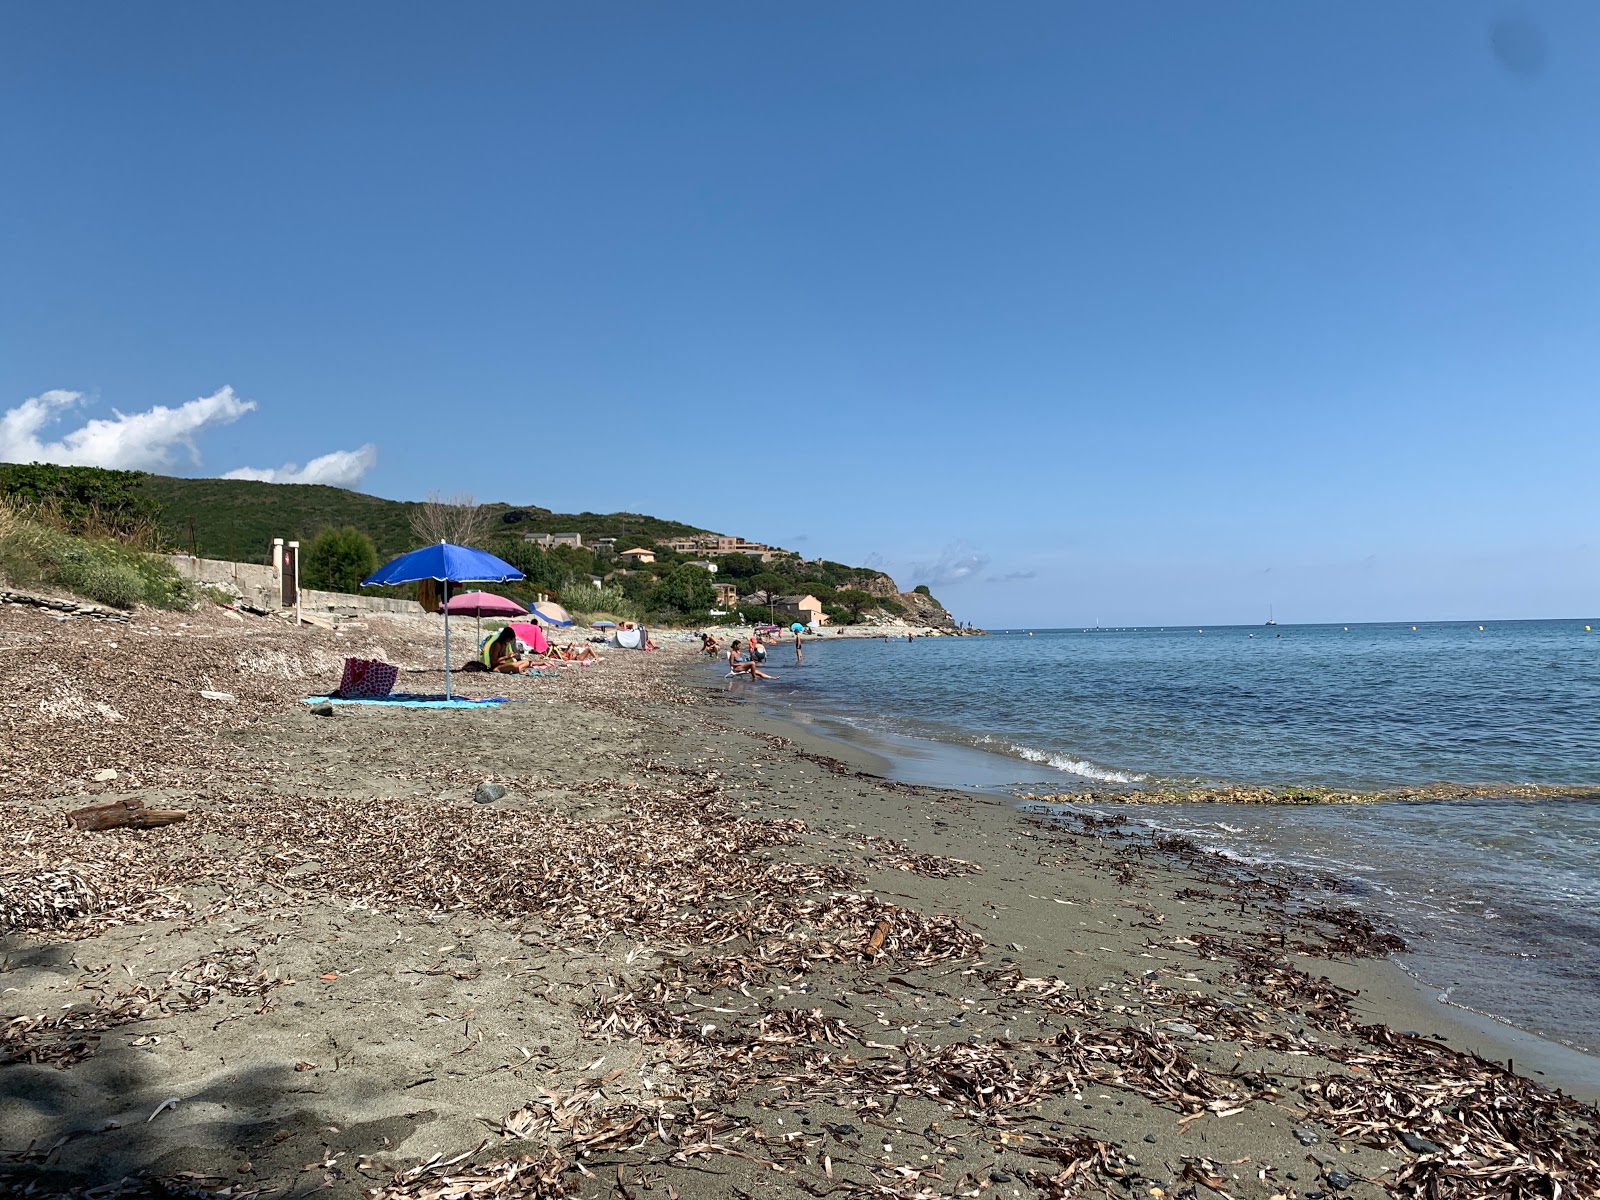 Fotografie cu Sisco beach cu nivelul de curățenie in medie